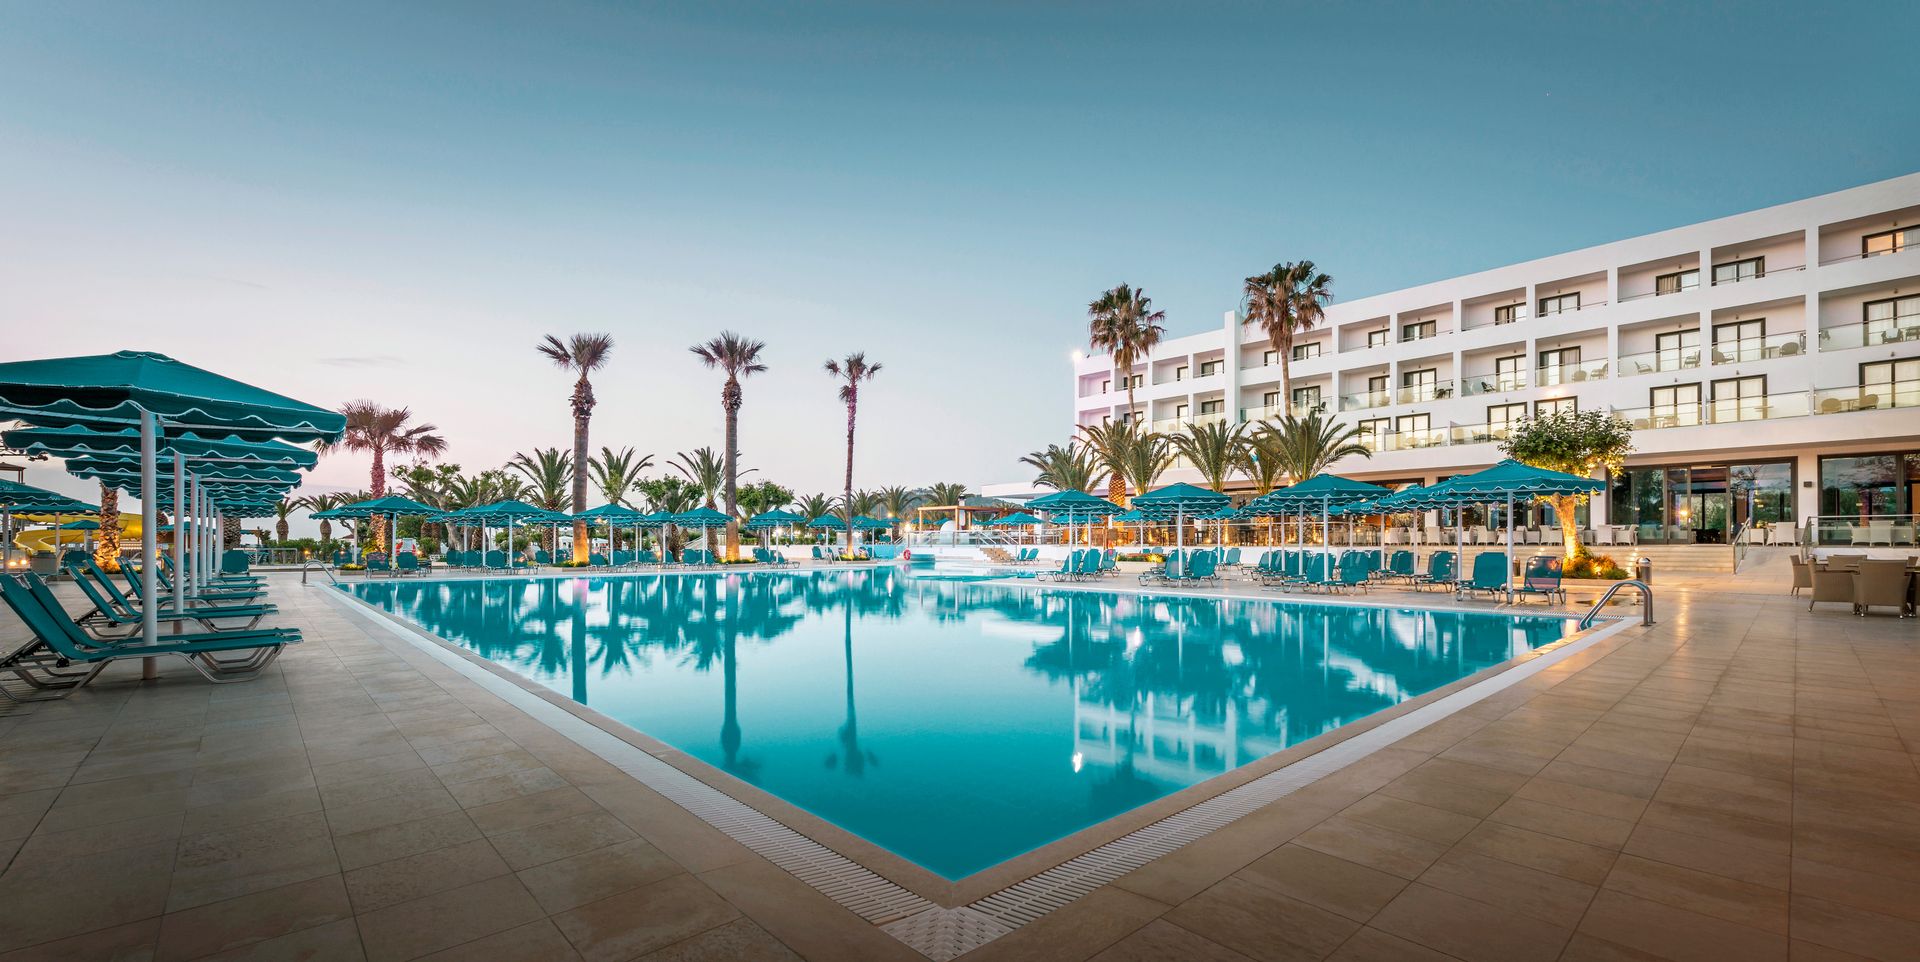 5* Mitsis Faliraki Beach Hotel & Spa - Φαληράκι, Ρόδος ✦ 2 Ημέρες (1 Διανυκτέρευση) ✦ 2 άτομα + 1 παιδί έως και 12 ετών ✦ 12 ✦ έως 13/11/2023 ✦ Μπροστά στην παραλία!